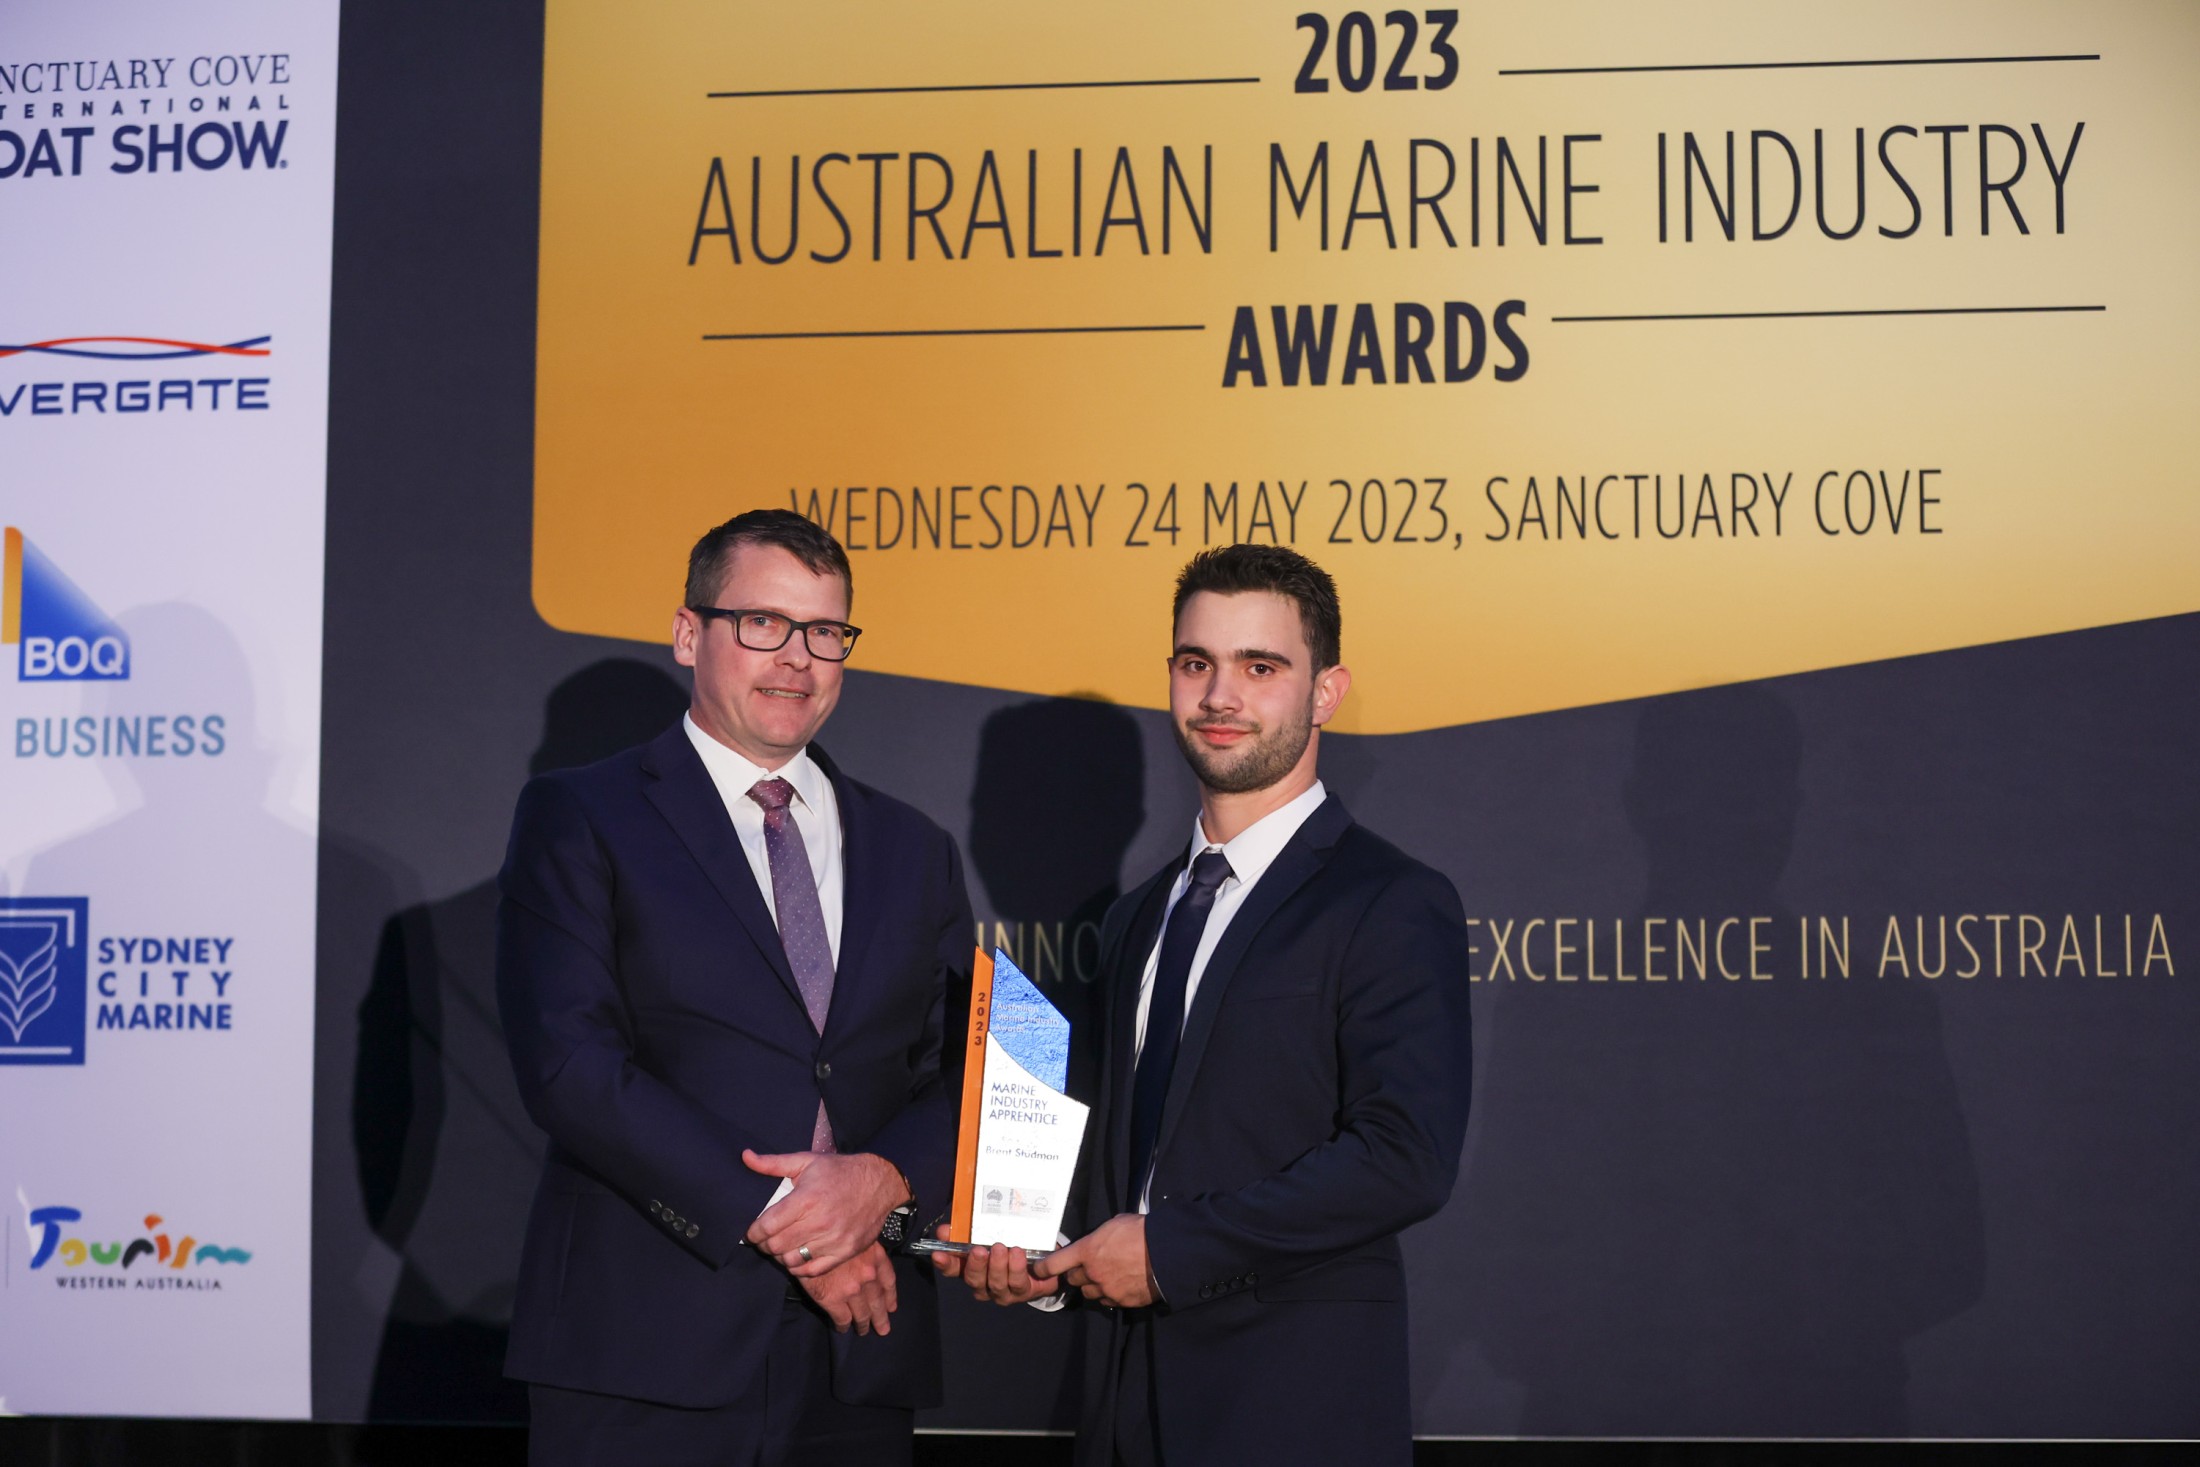 Australian Marine Industry Awards 2023 © Salty Dingo 2023 CG-CRG39185